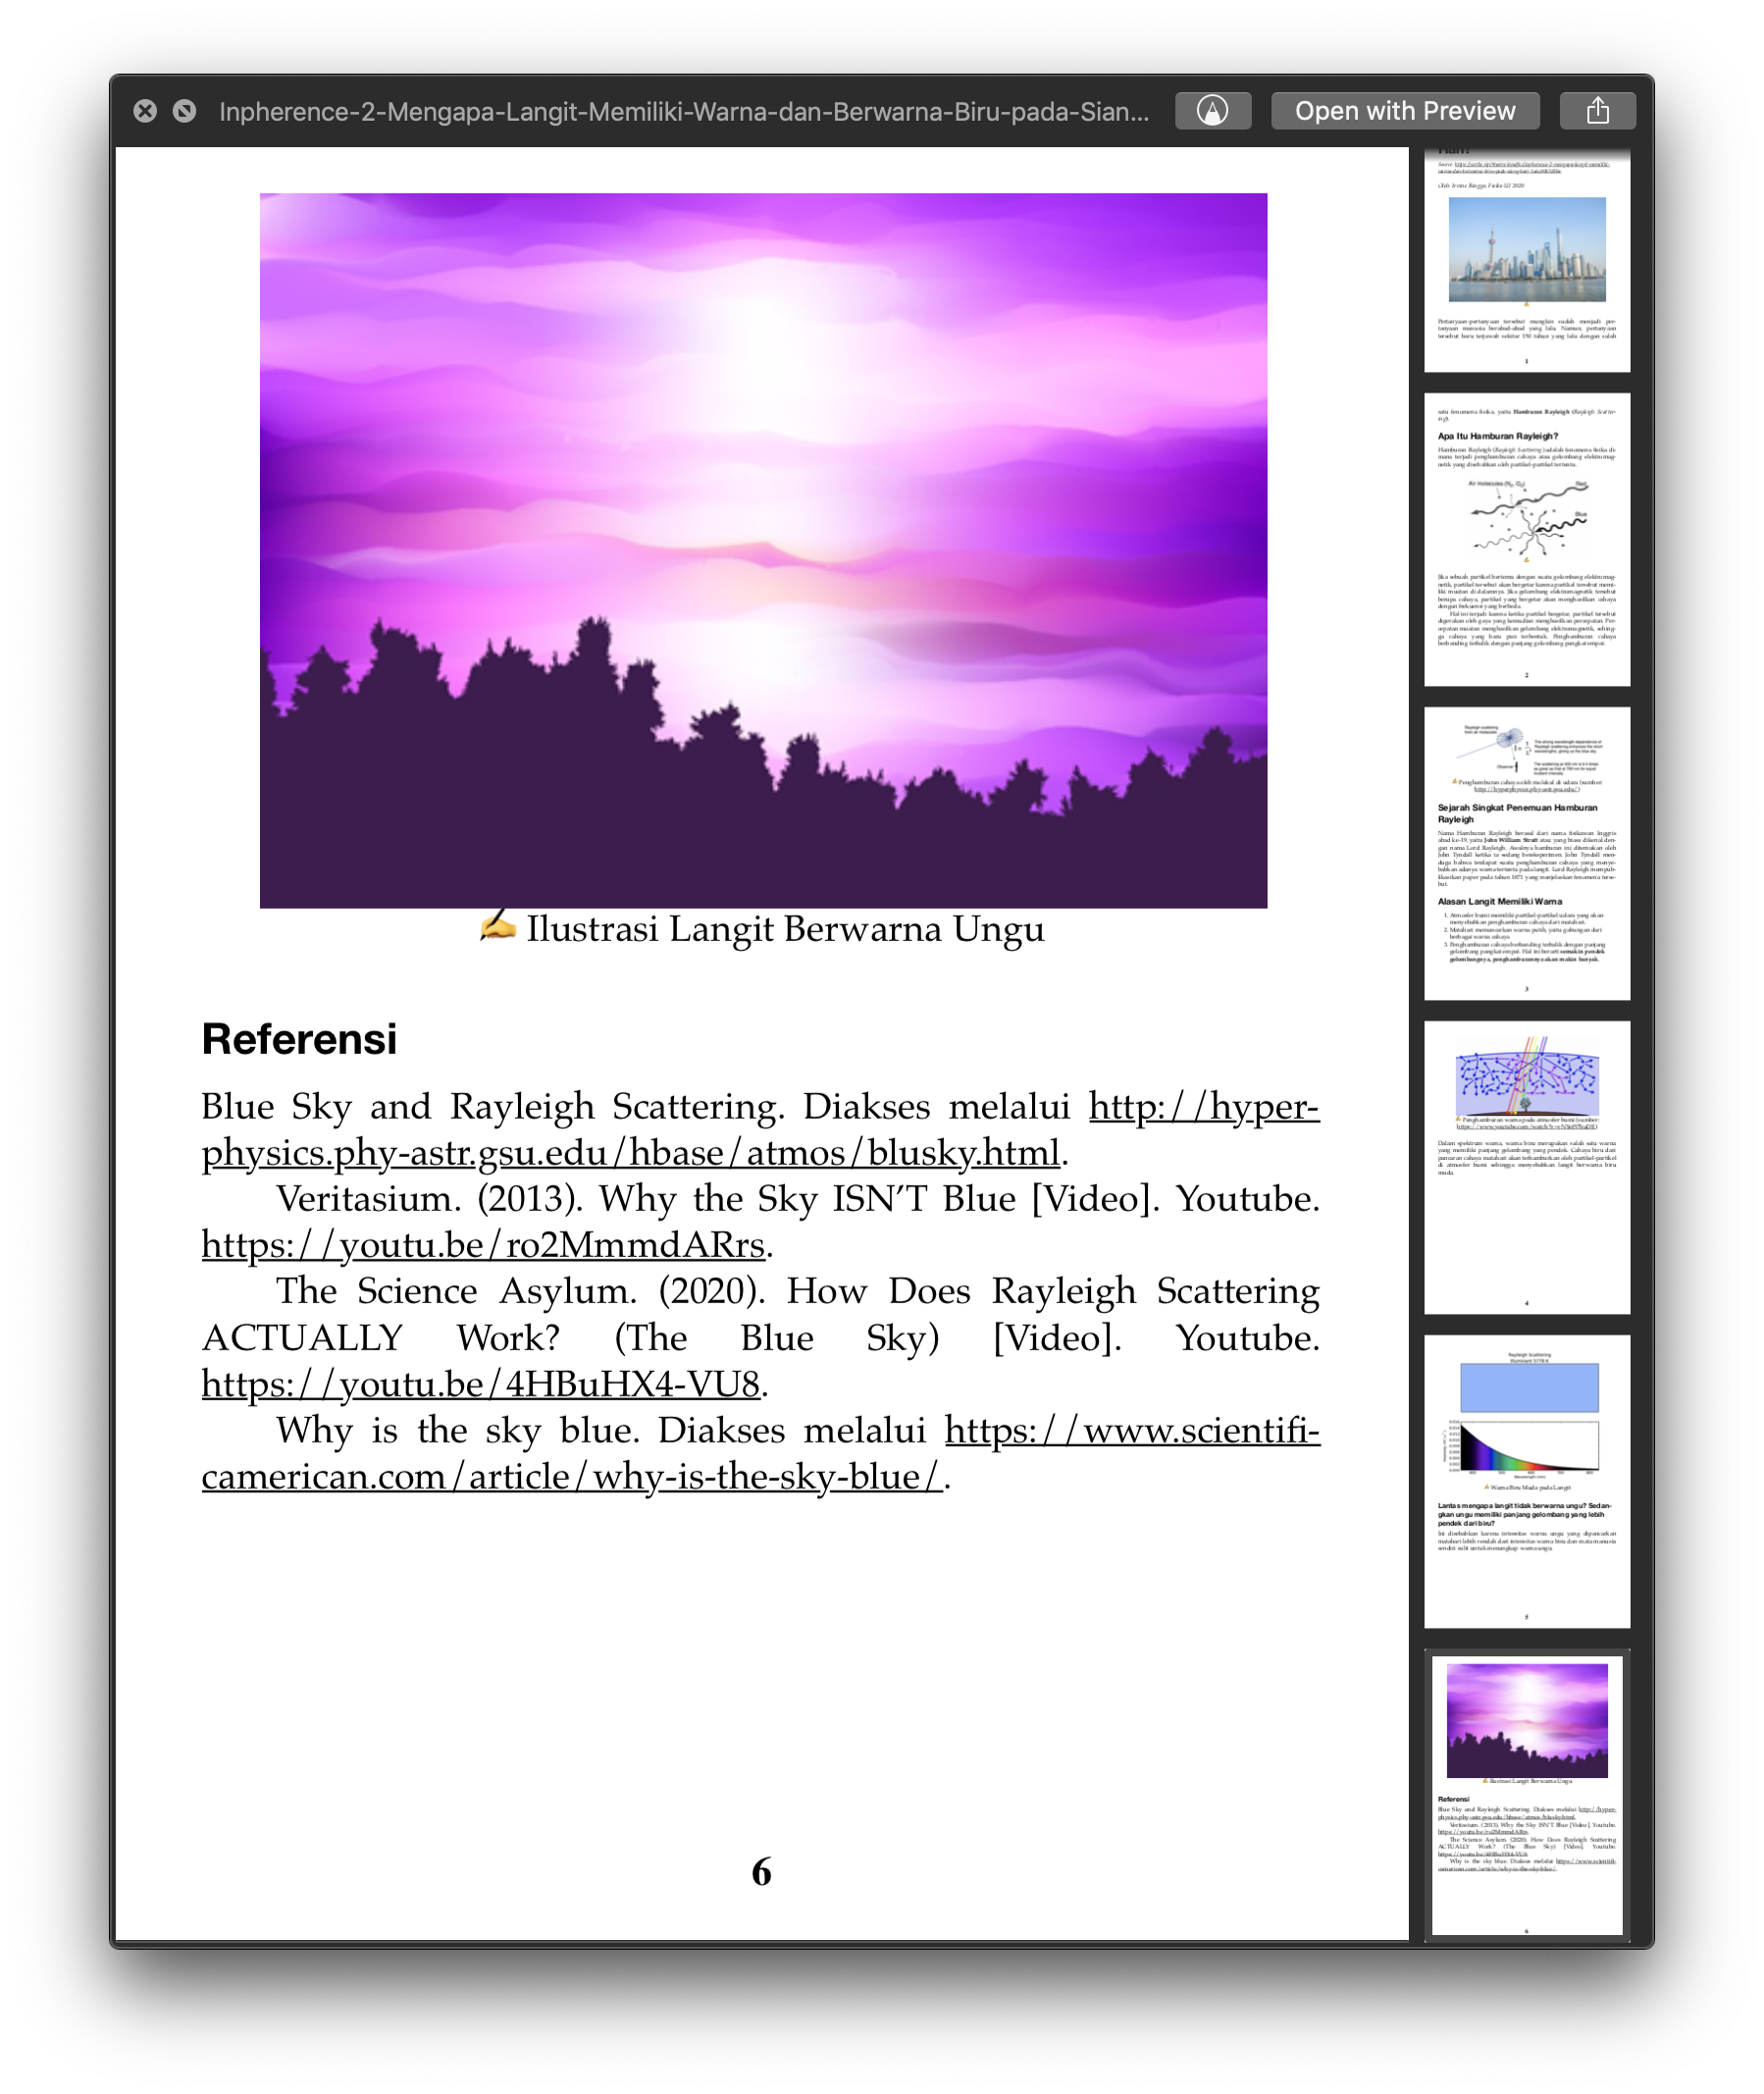 Download medium articles as pdf hermes software download